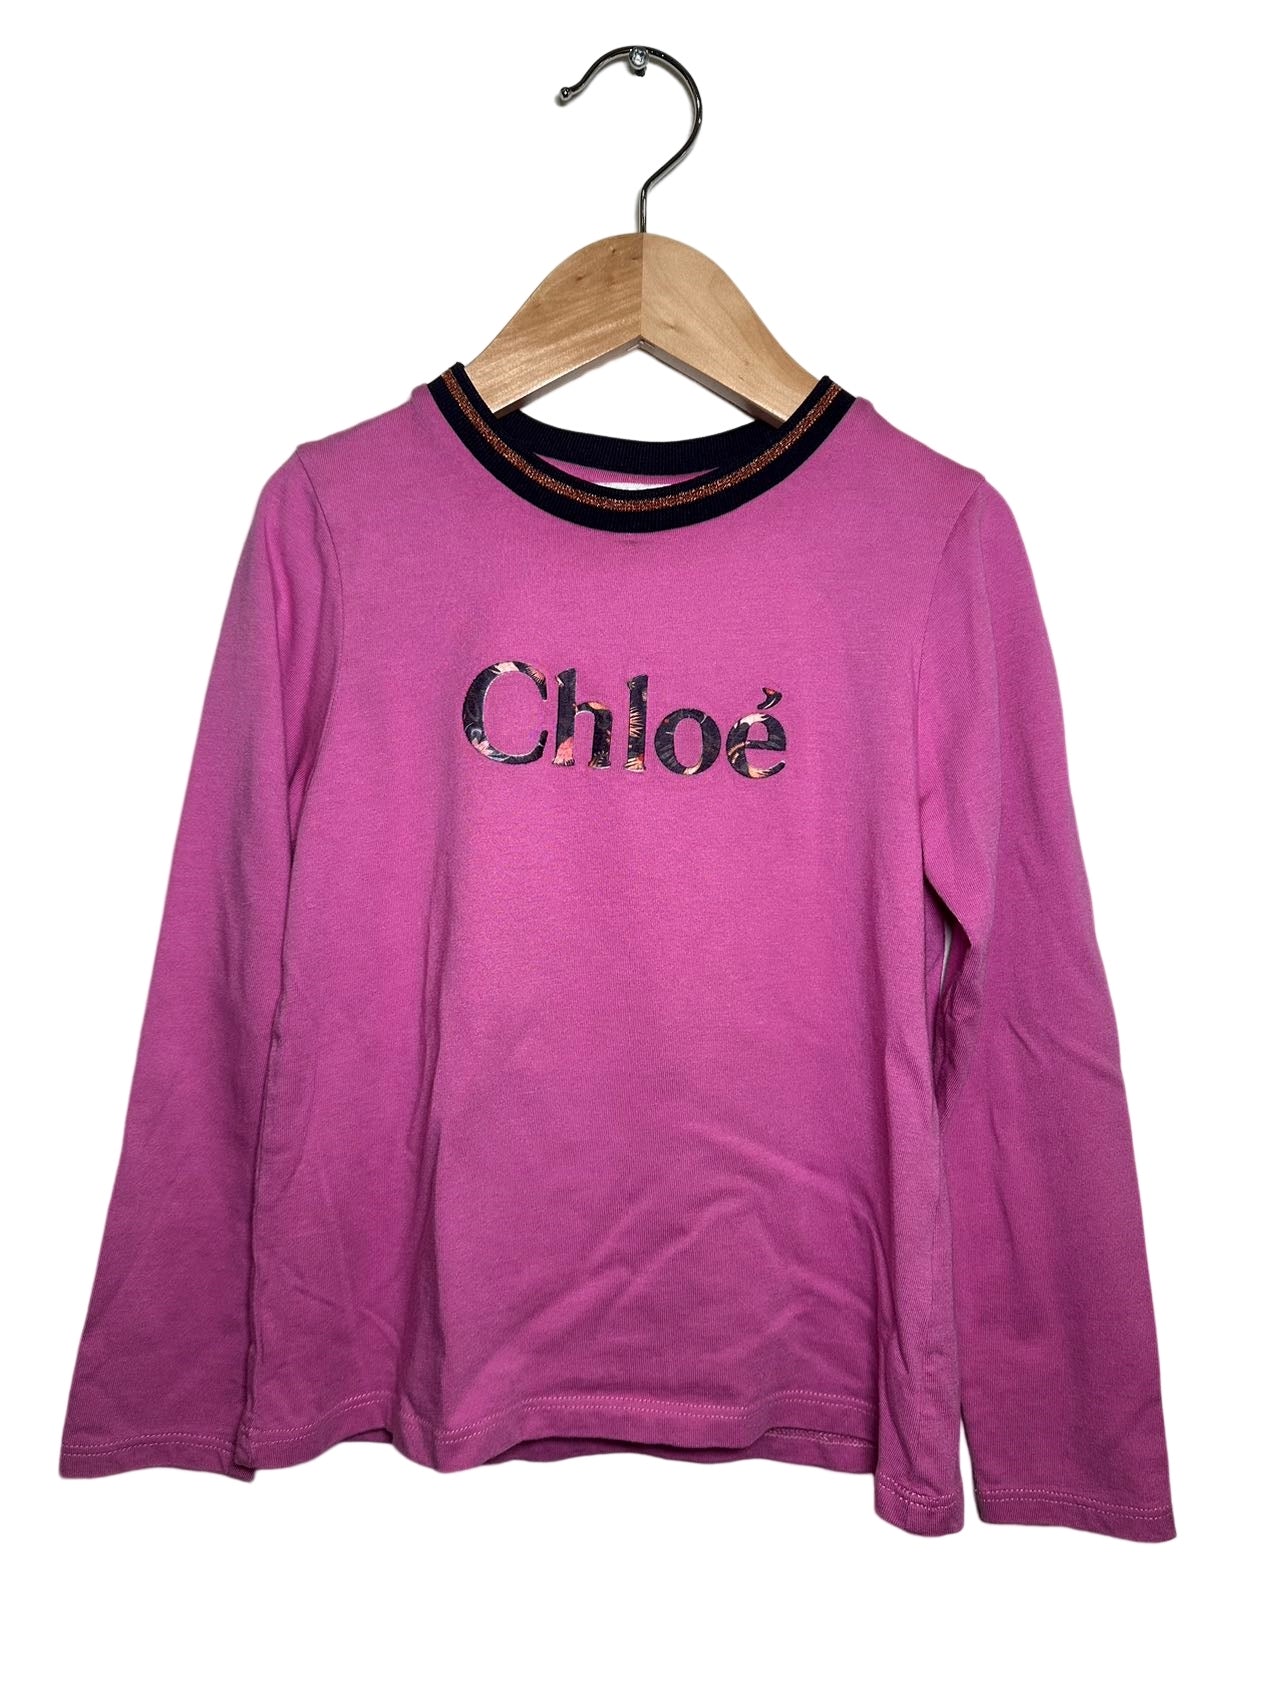 Chloe Long Sleeves T shirt (6Y)